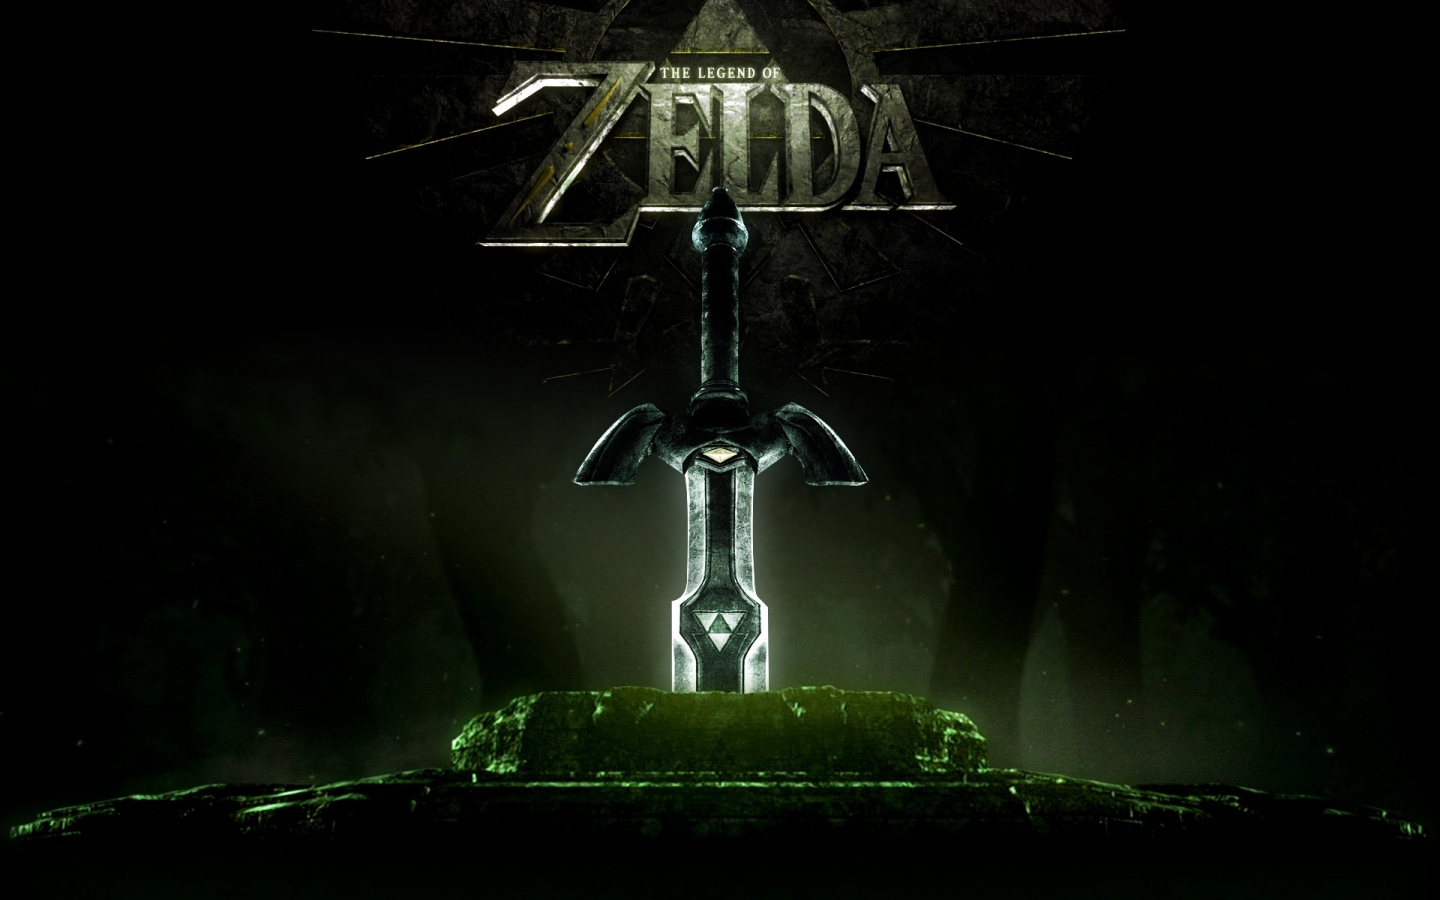 Legend of Zelda for 1440 x 900 widescreen resolution